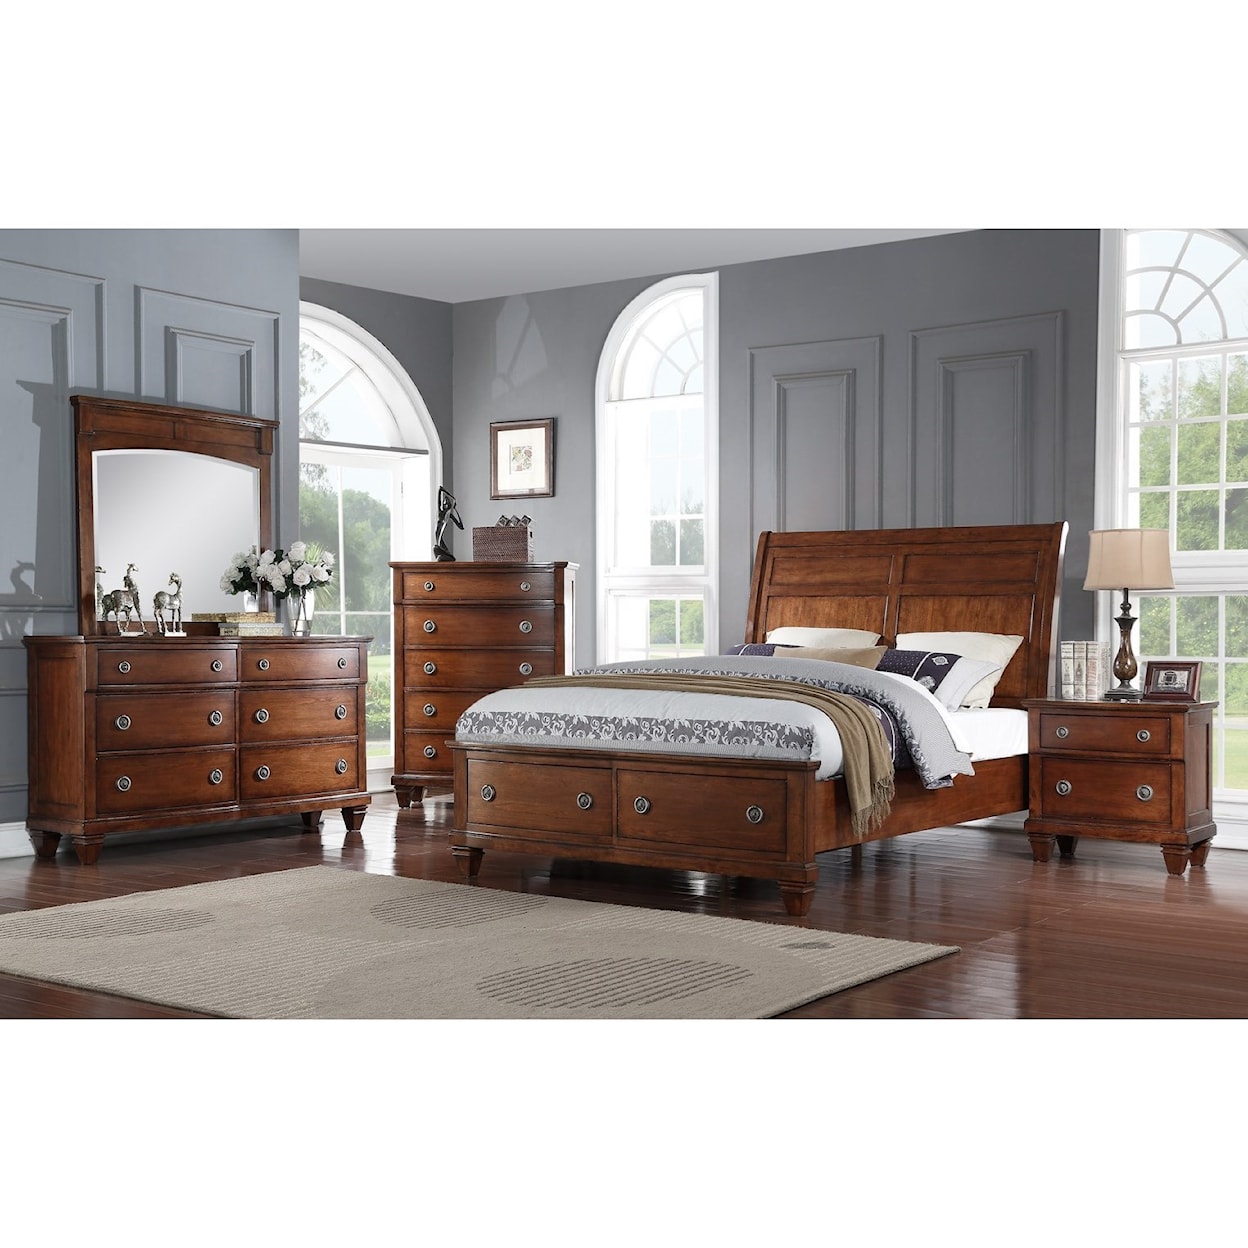 Avalon Furniture B068 King Bedroom Group